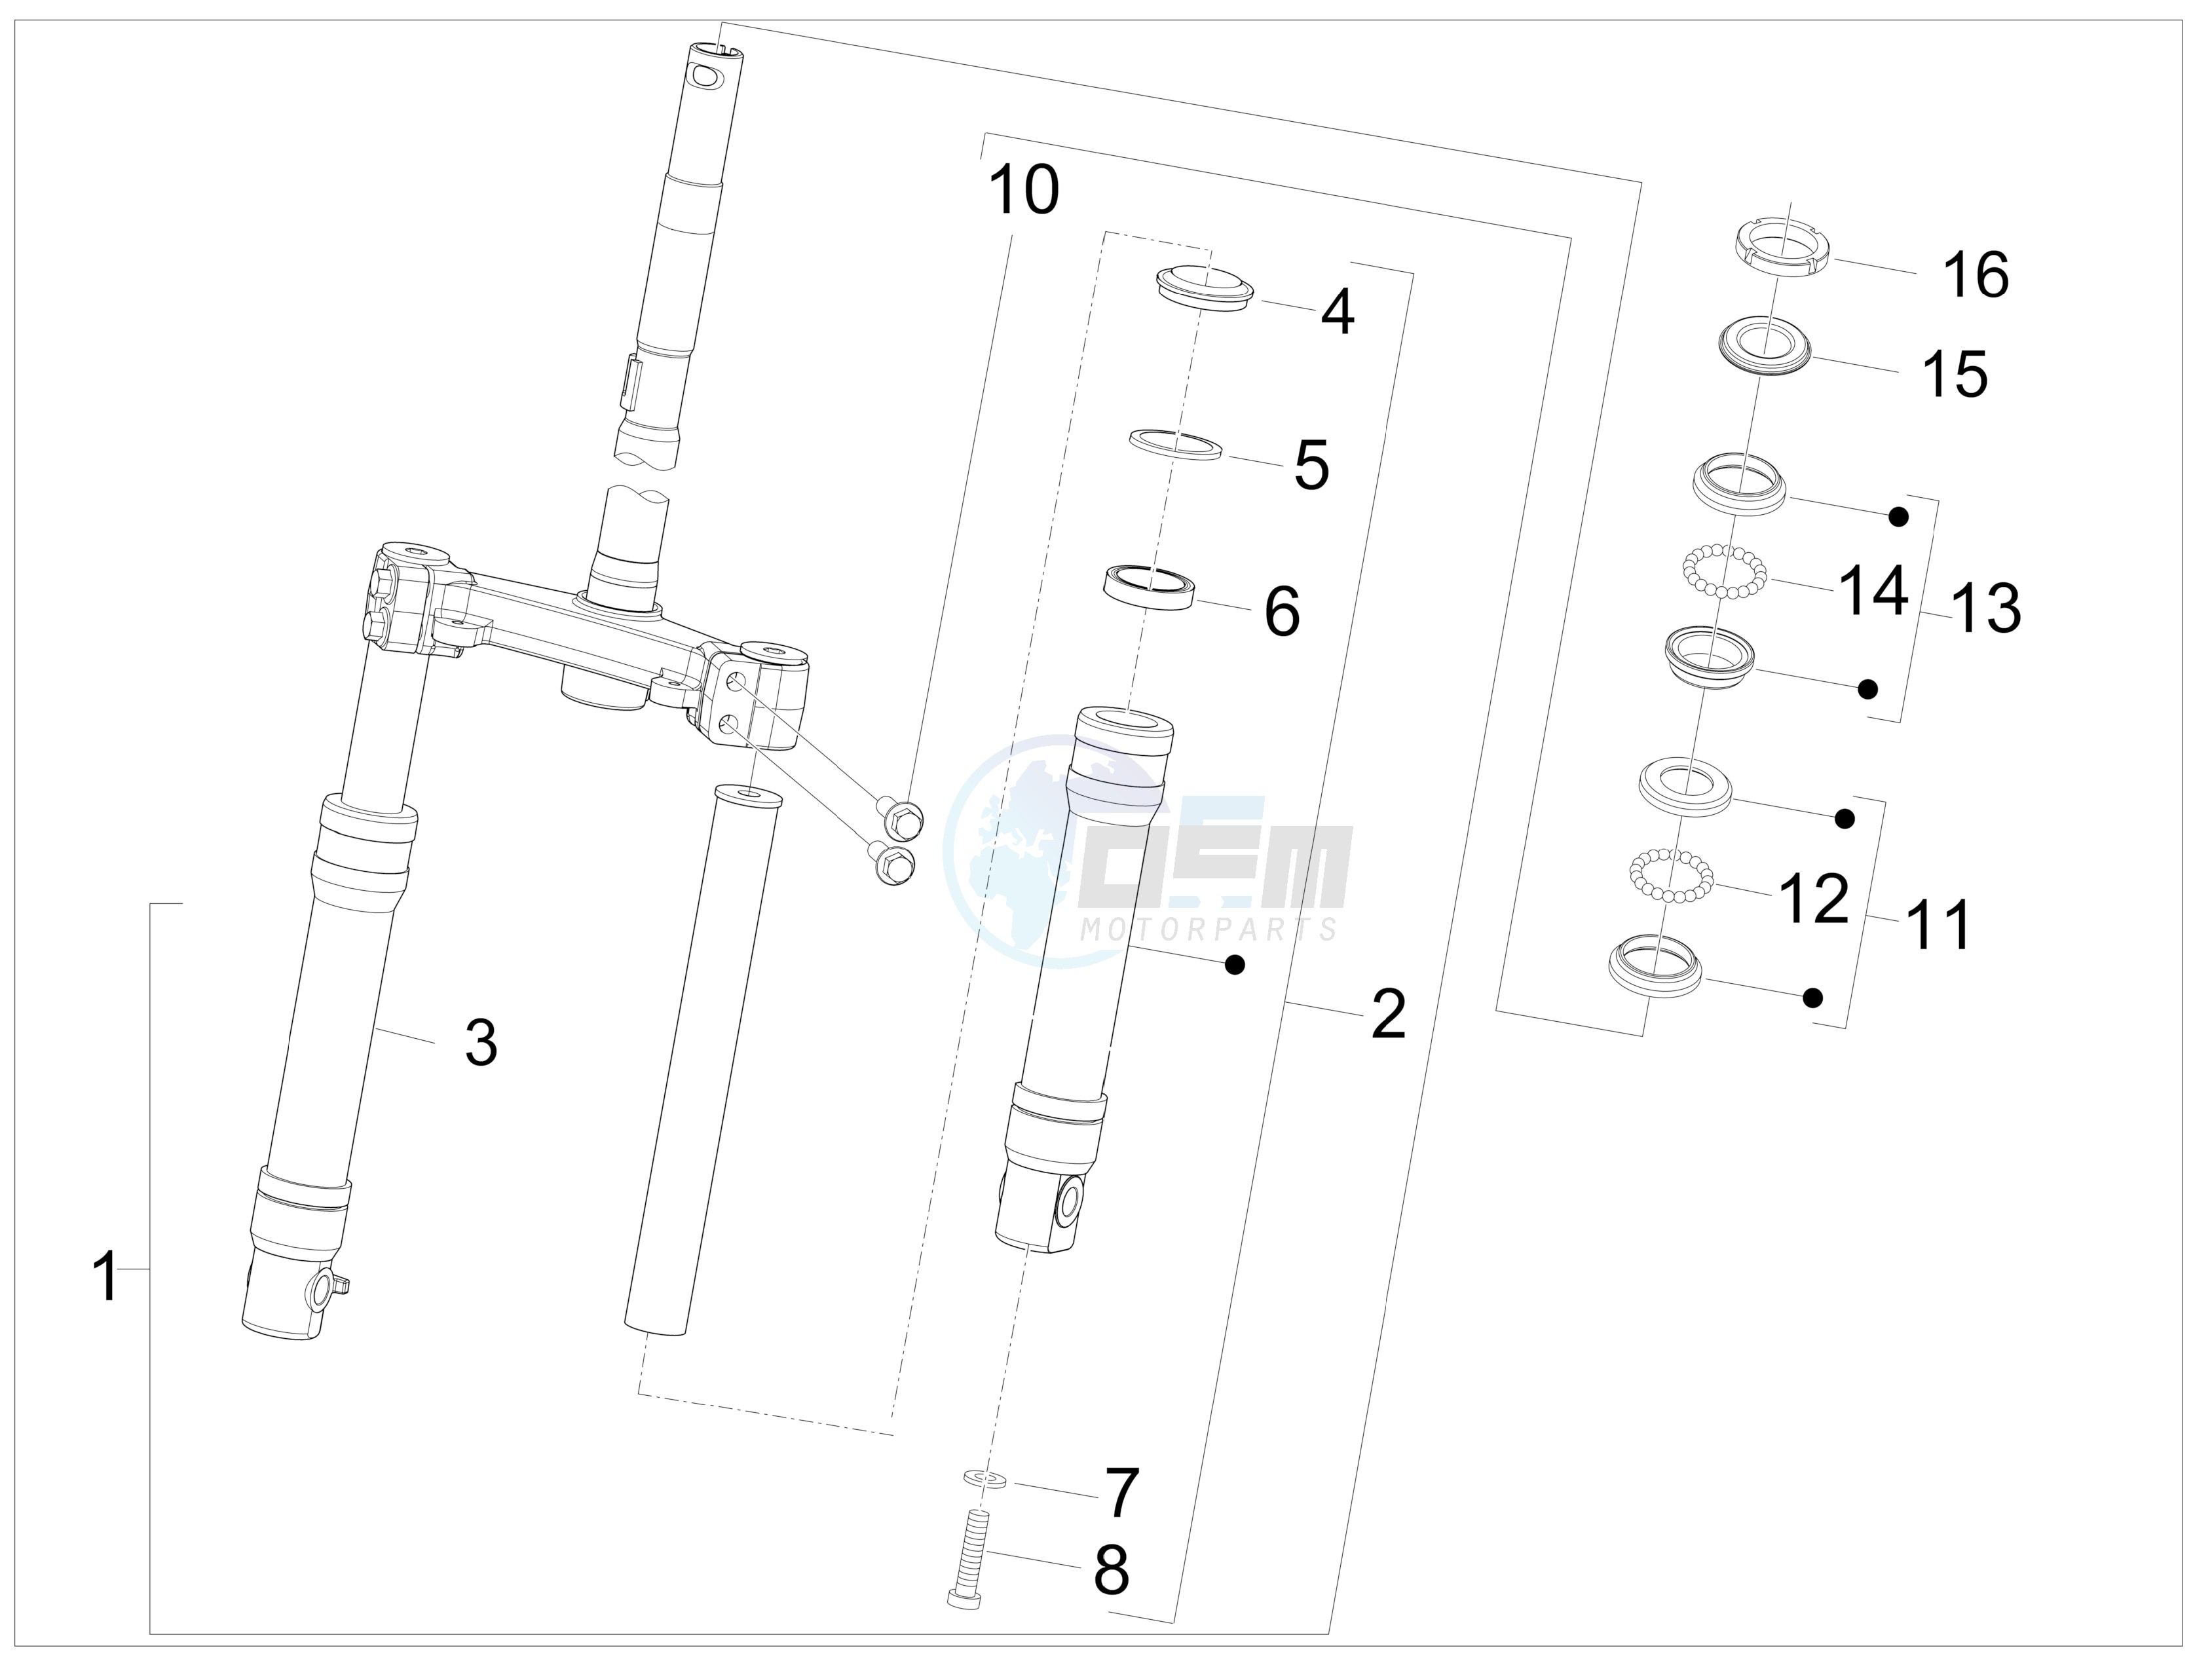 Fork components (Wuxi Top) blueprint